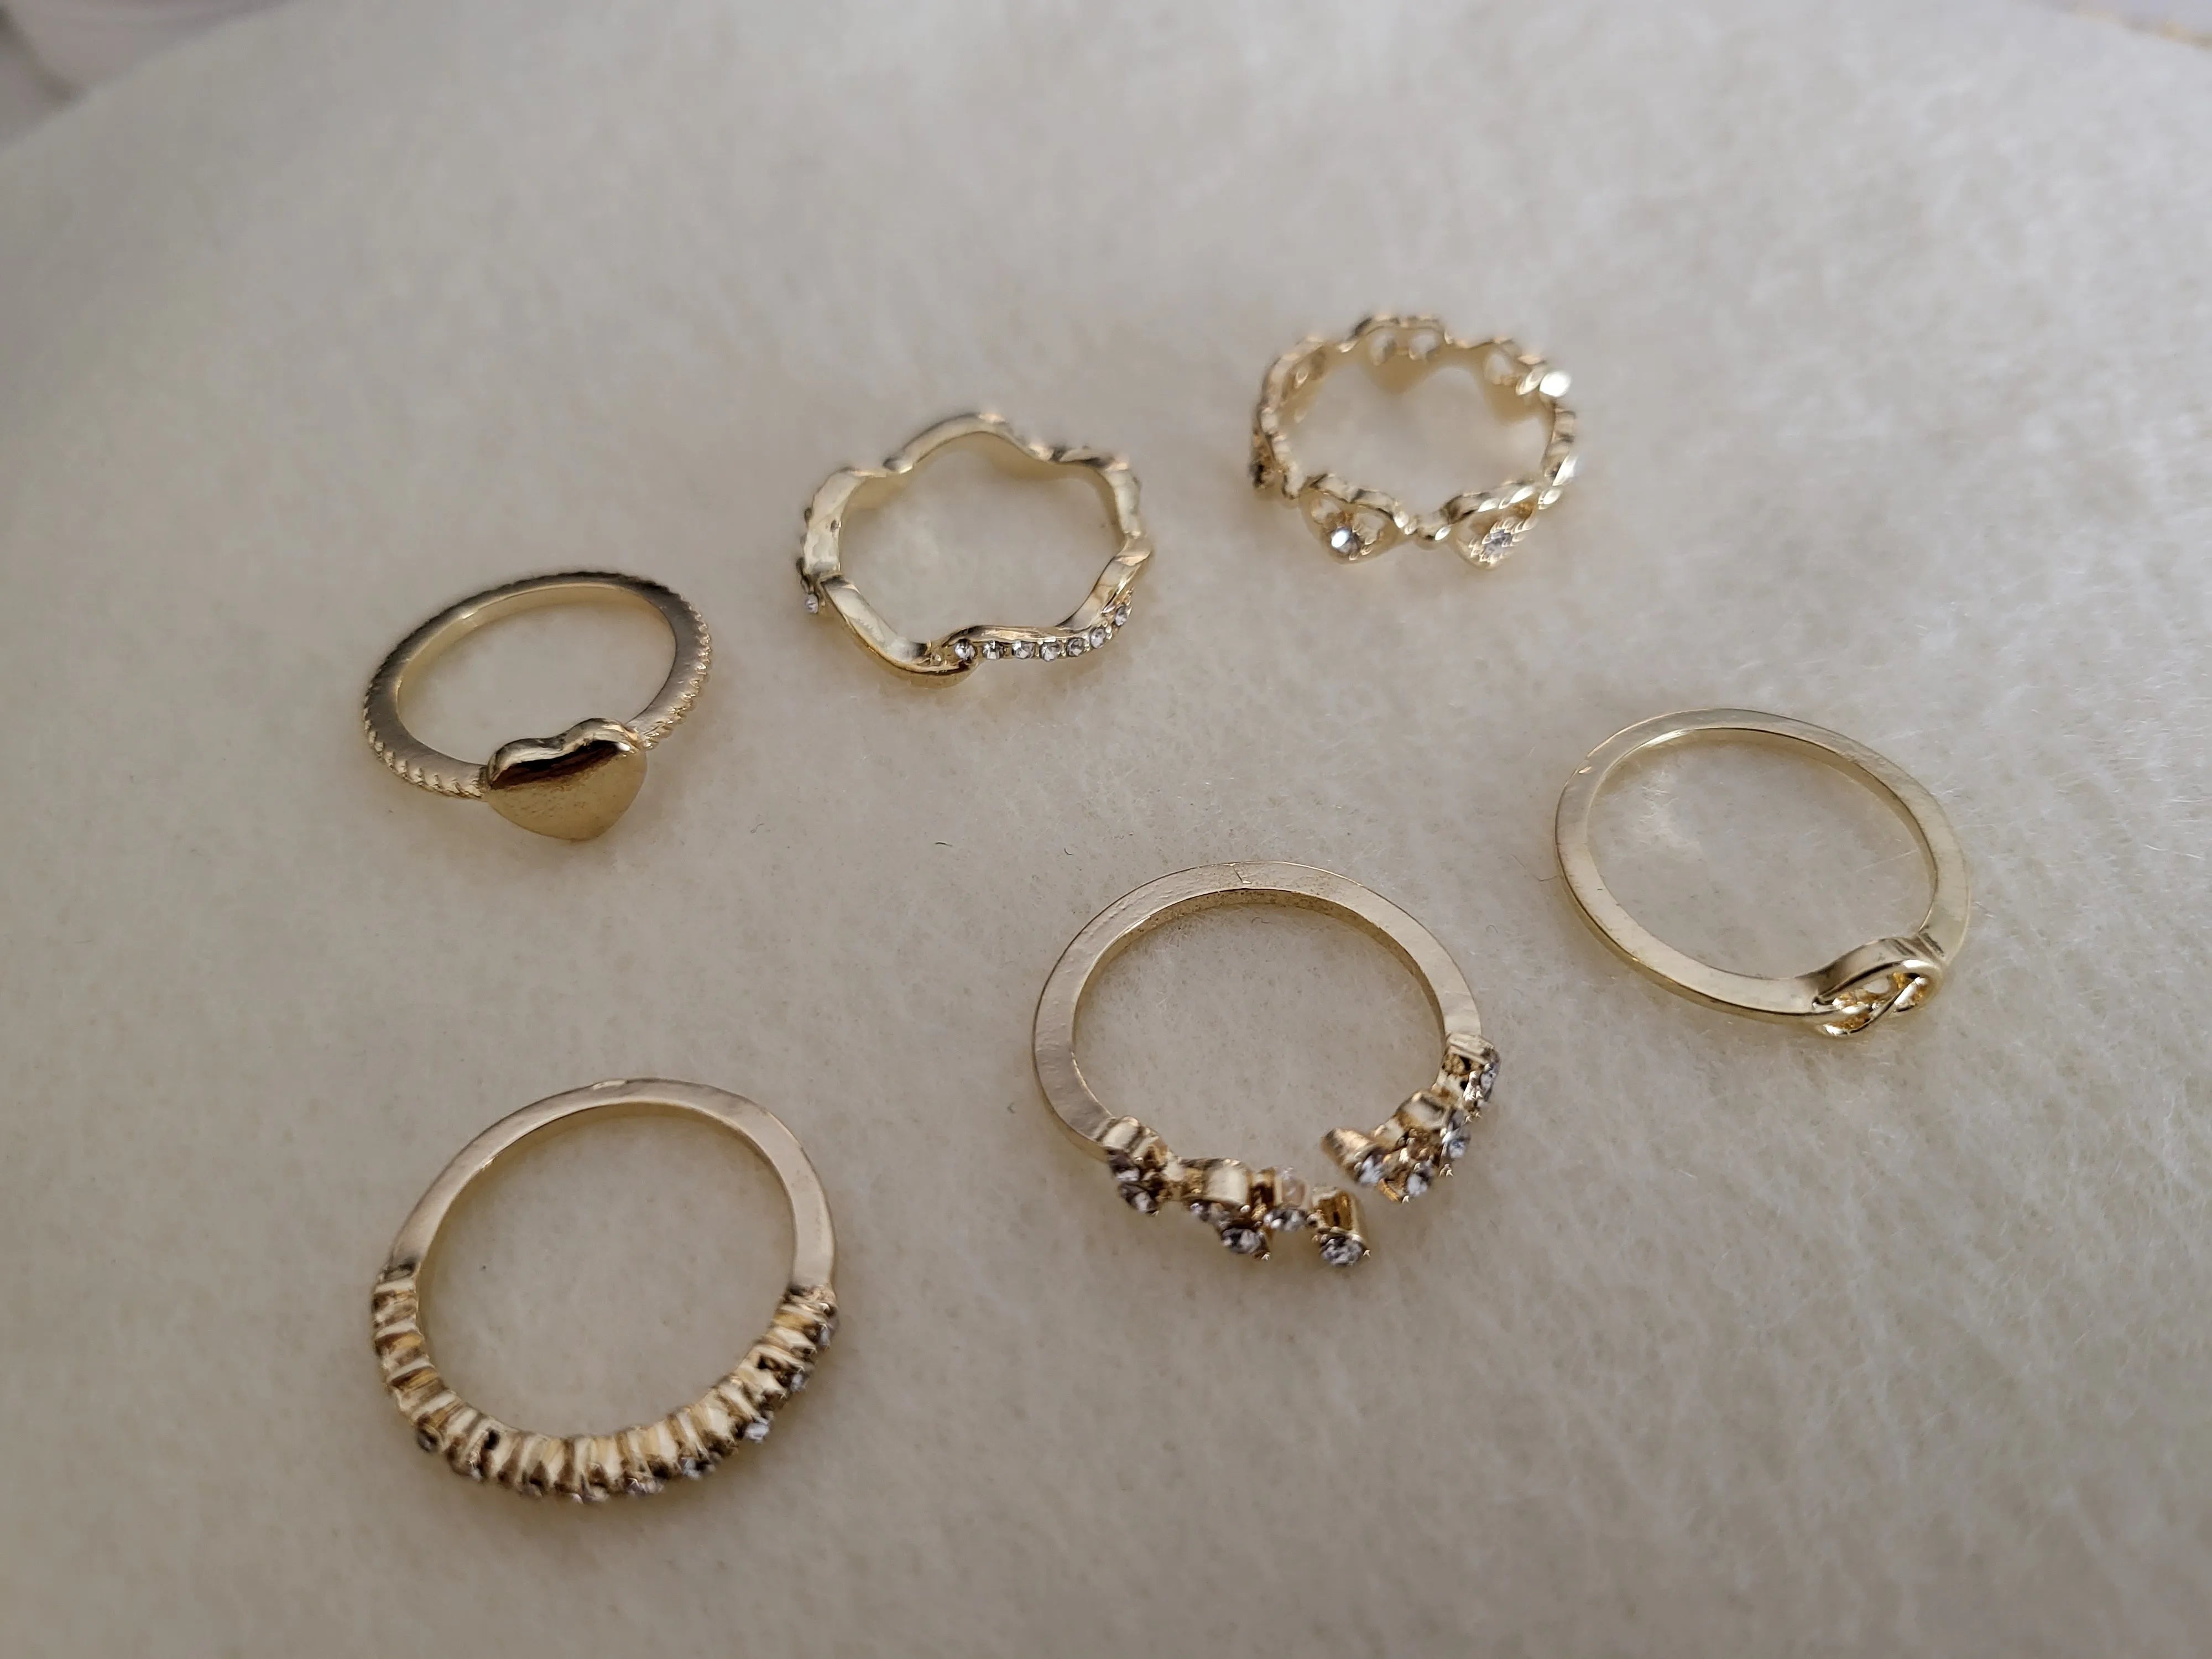 Amelia Adjustable Gold Ring Set product images.